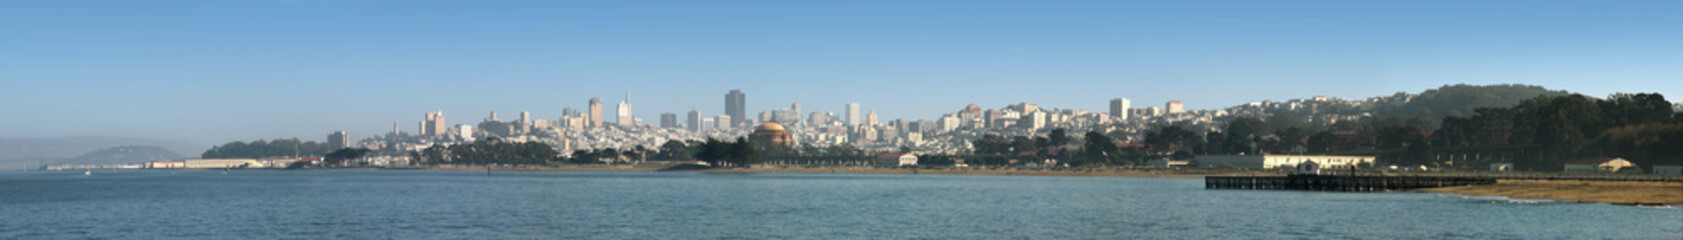 Fototapeta na wymiar San Francisco Panorama z Treasure Island w Park Presidio